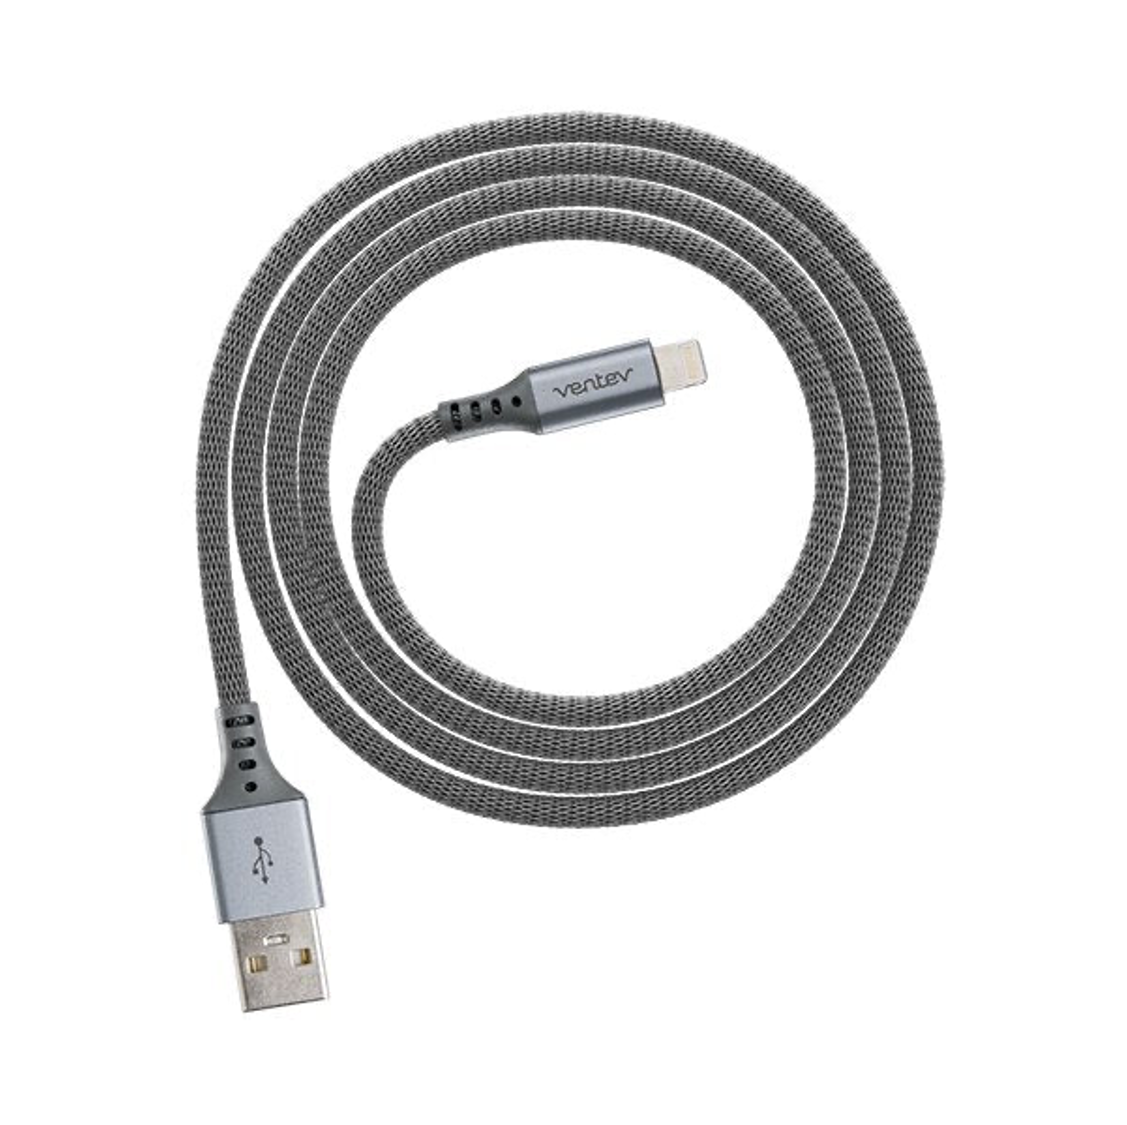 Cable Plano Ventev USB A a USB C 1m - Blanco